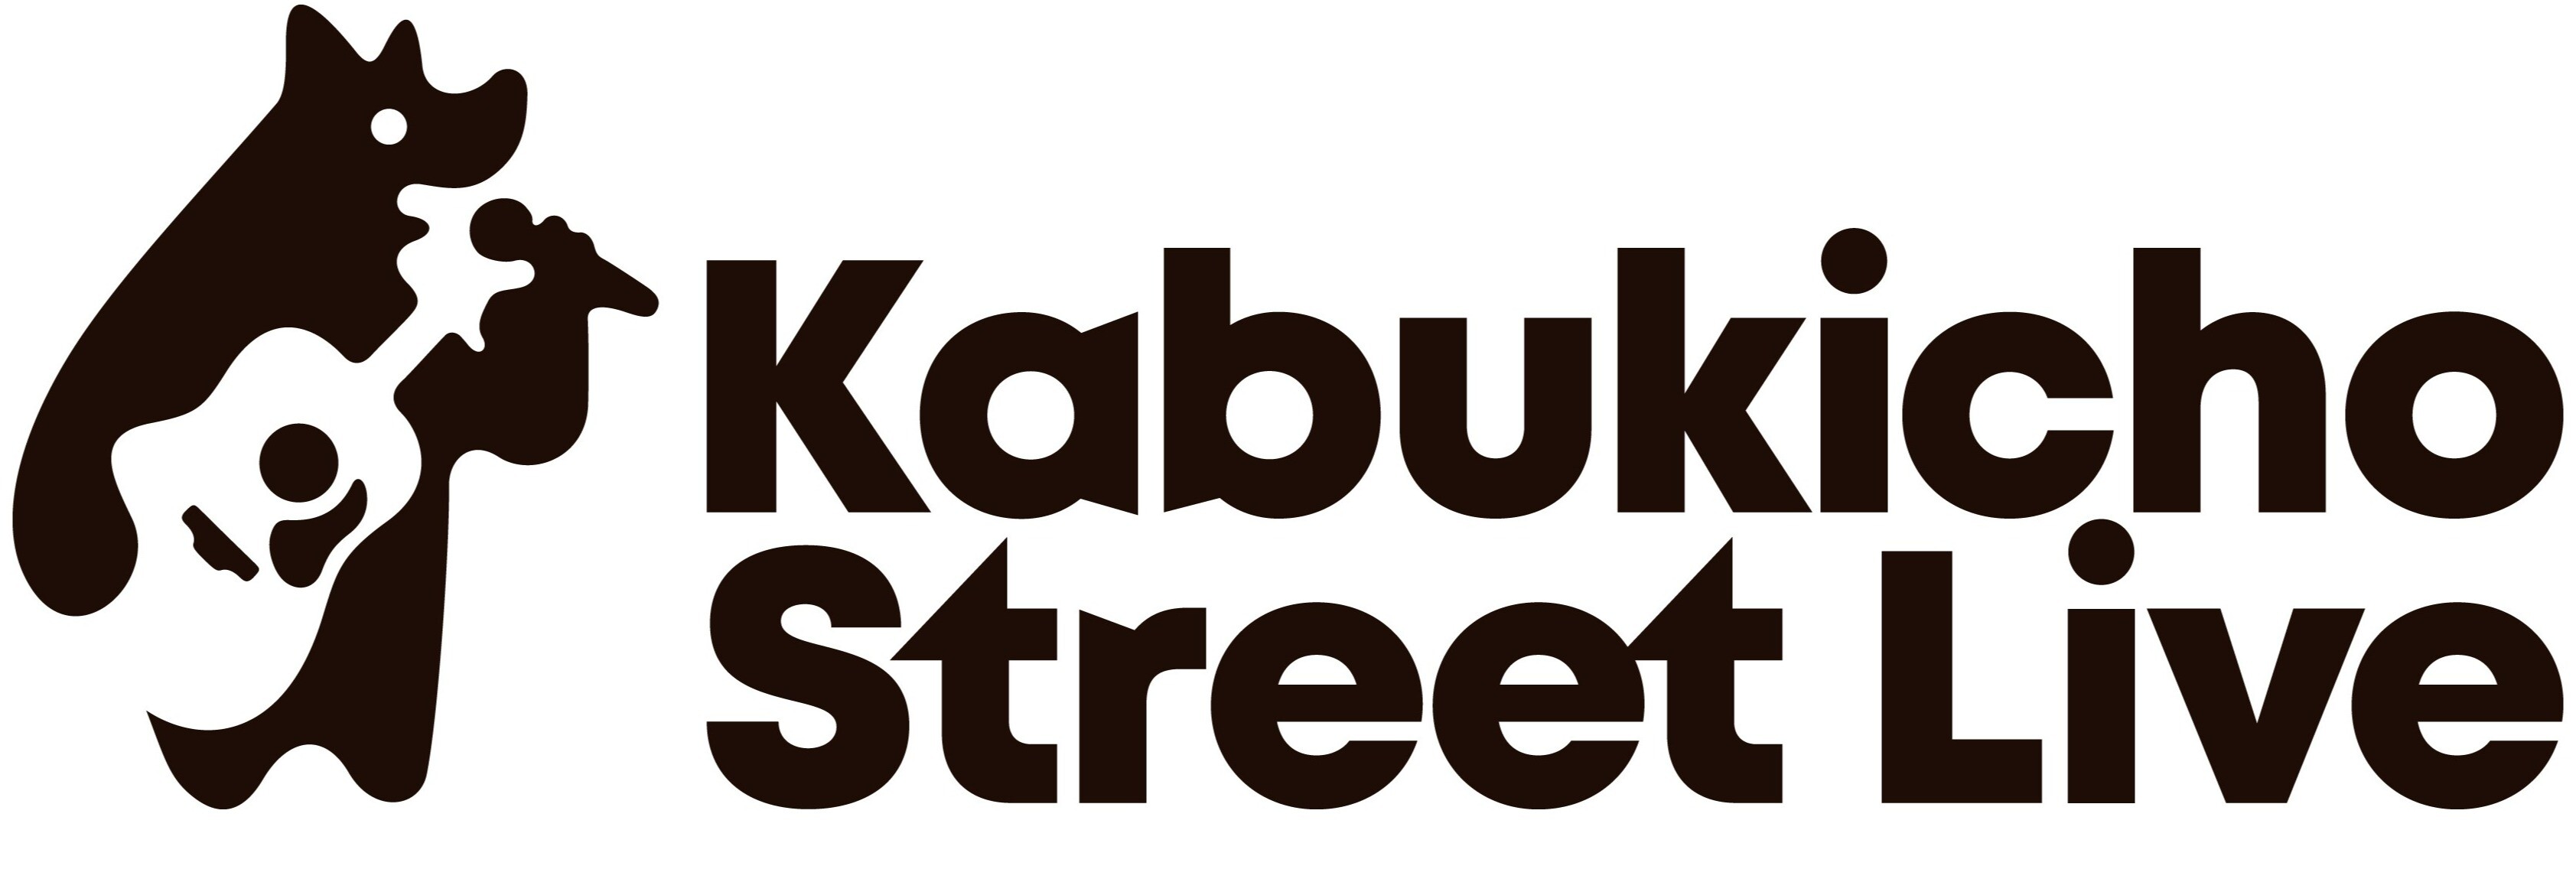 「Kabukicho Street Live」予約の手順